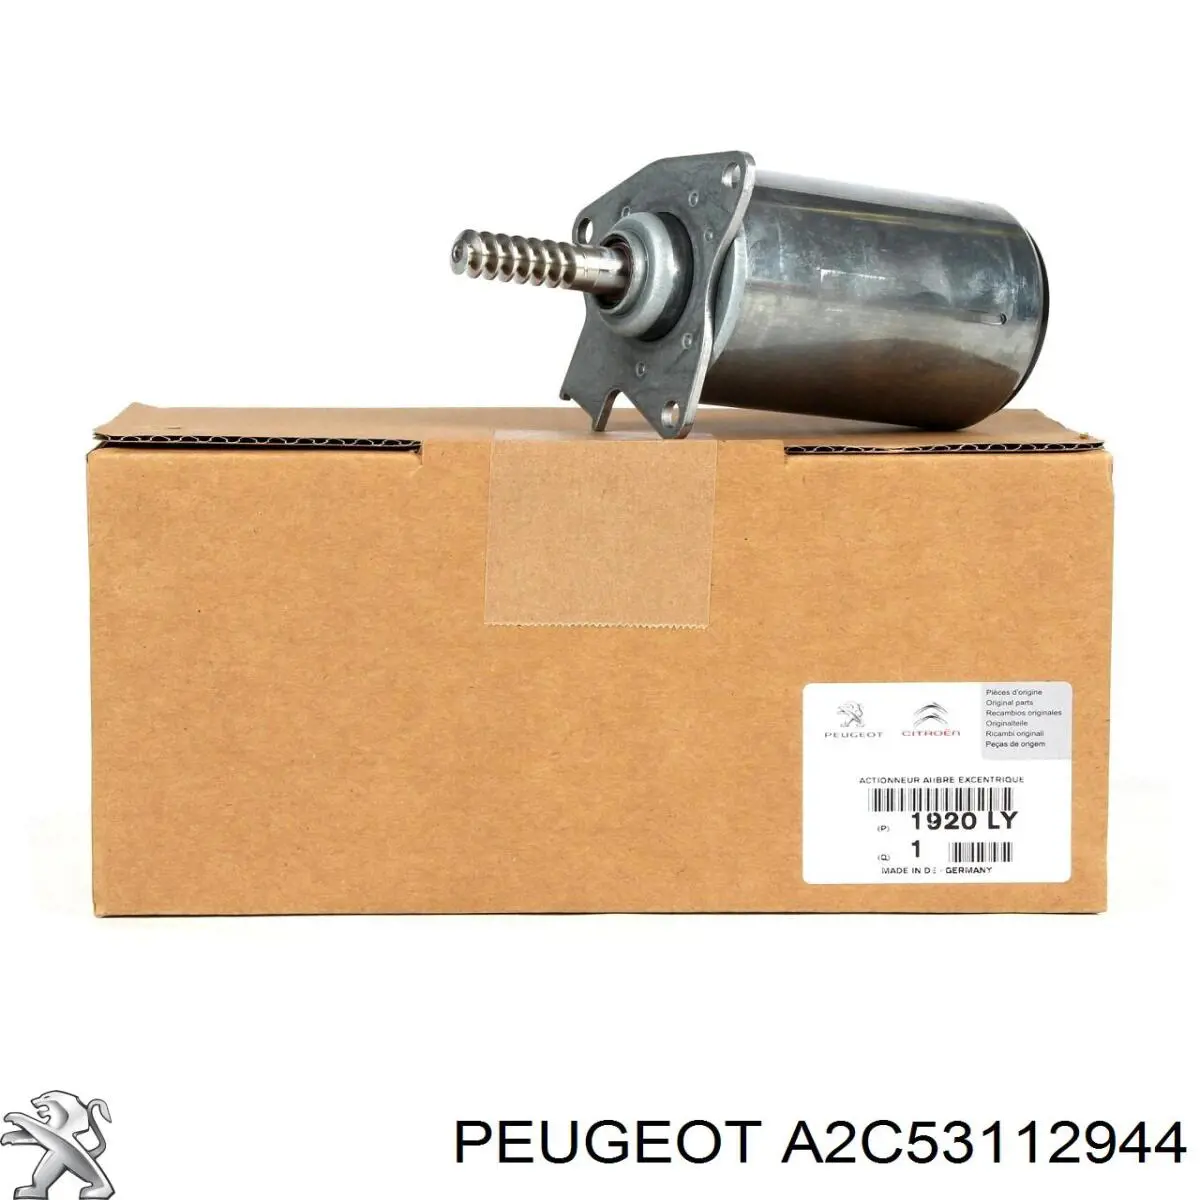 A2C53112944 Peugeot/Citroen regulador das fases de distribuição de gás